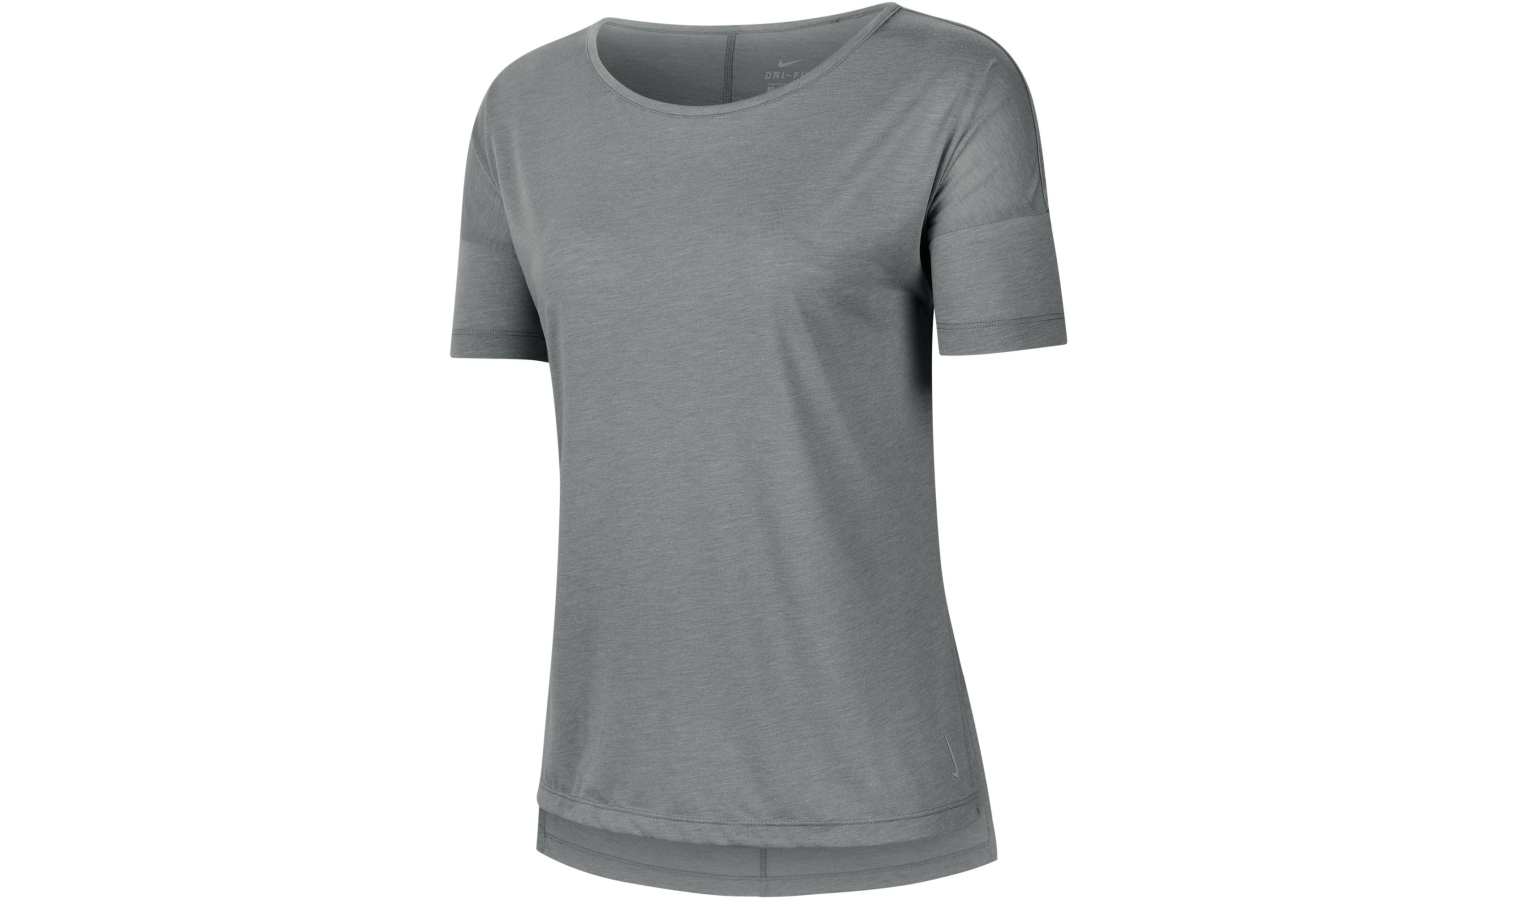 Womens functional short sleeve shirt Nike YOGA TOP SS W grey